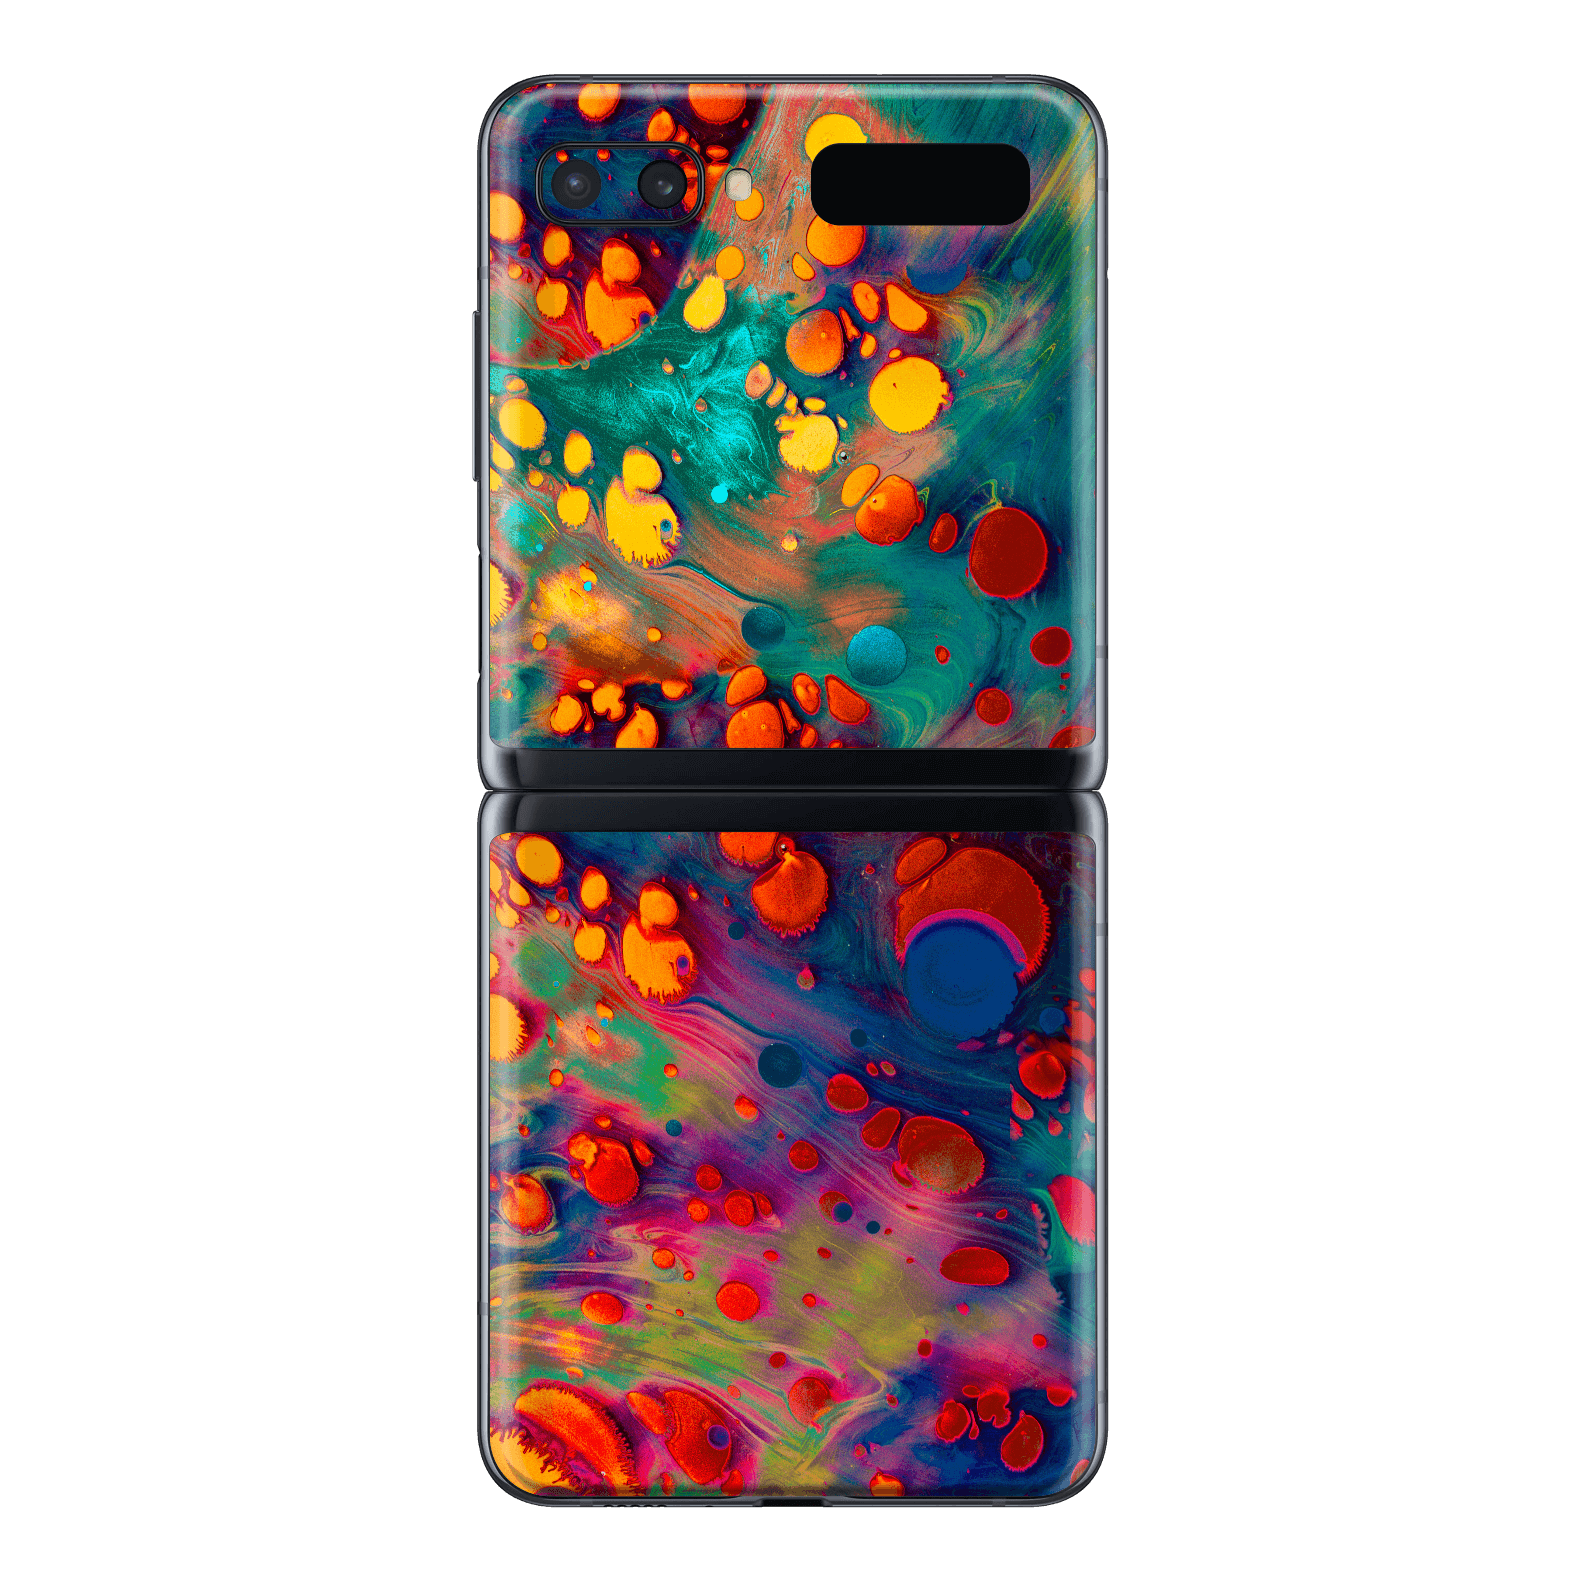 Samsung Galaxy Z Flip Print Printed Custom SIGNATURE Abstract Art Impression Skin Wrap Sticker Decal Cover Protector by EasySkinz | EasySkinz.com